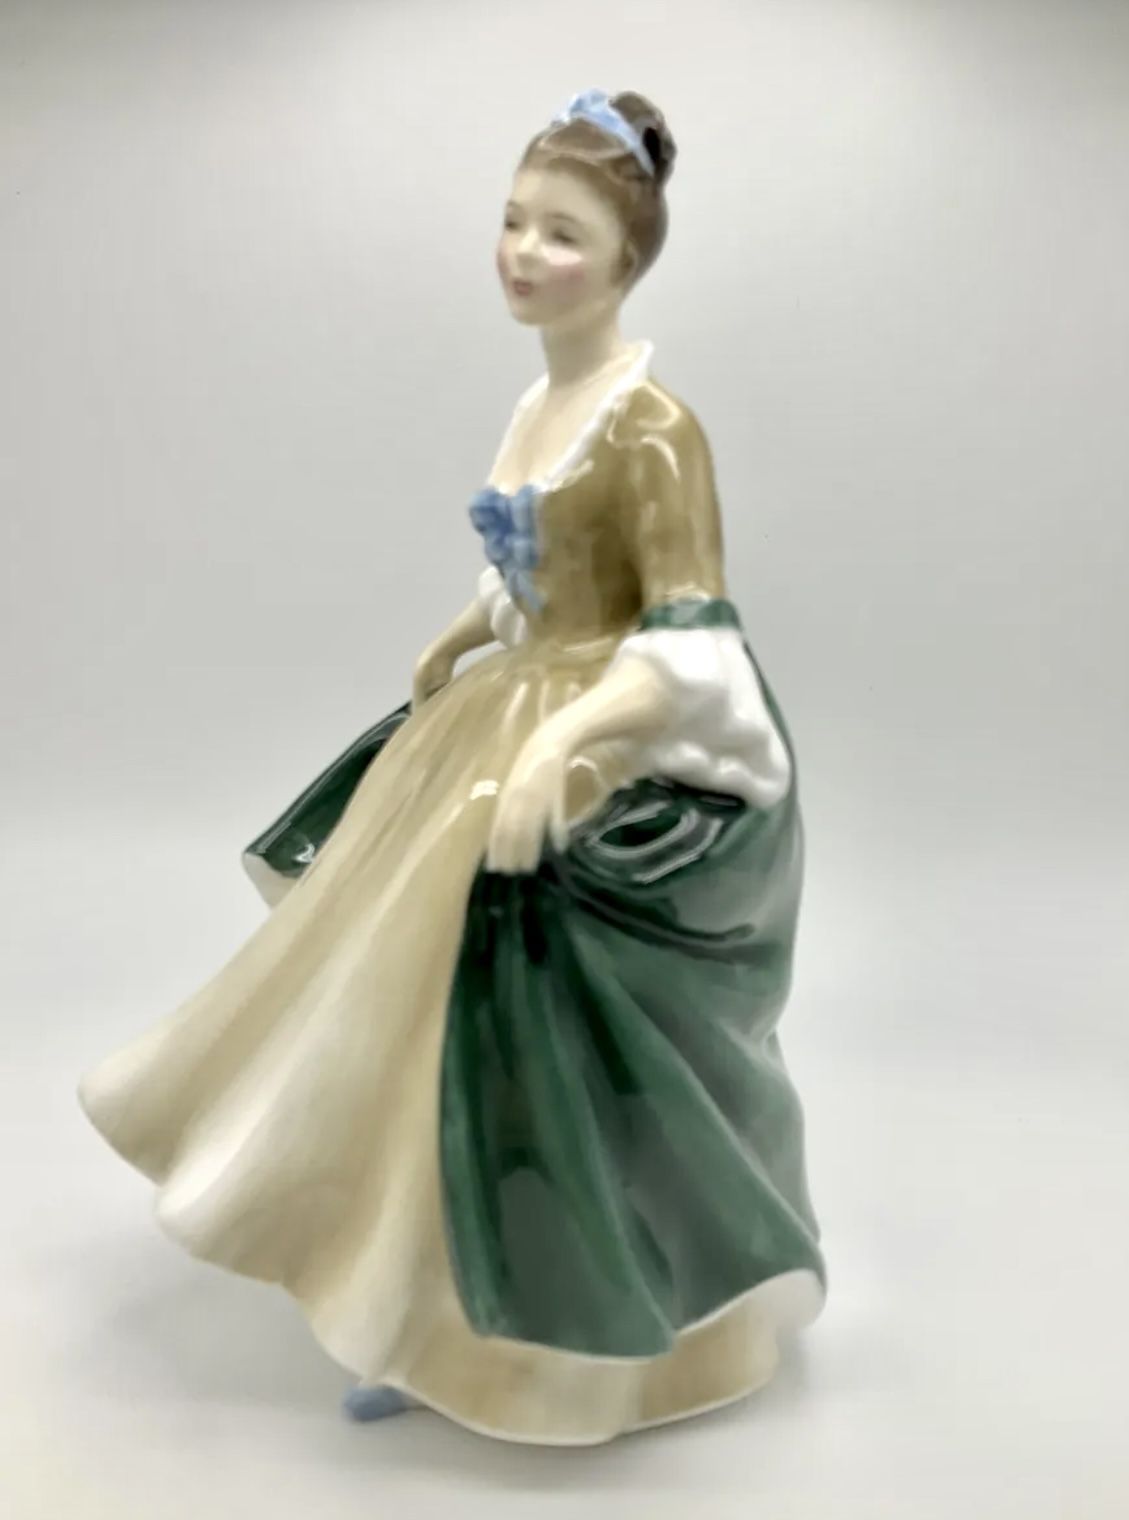 Vintage Royal Doulton “ELEGANCE” 1960 Figurine HN2264 Lady With Cape